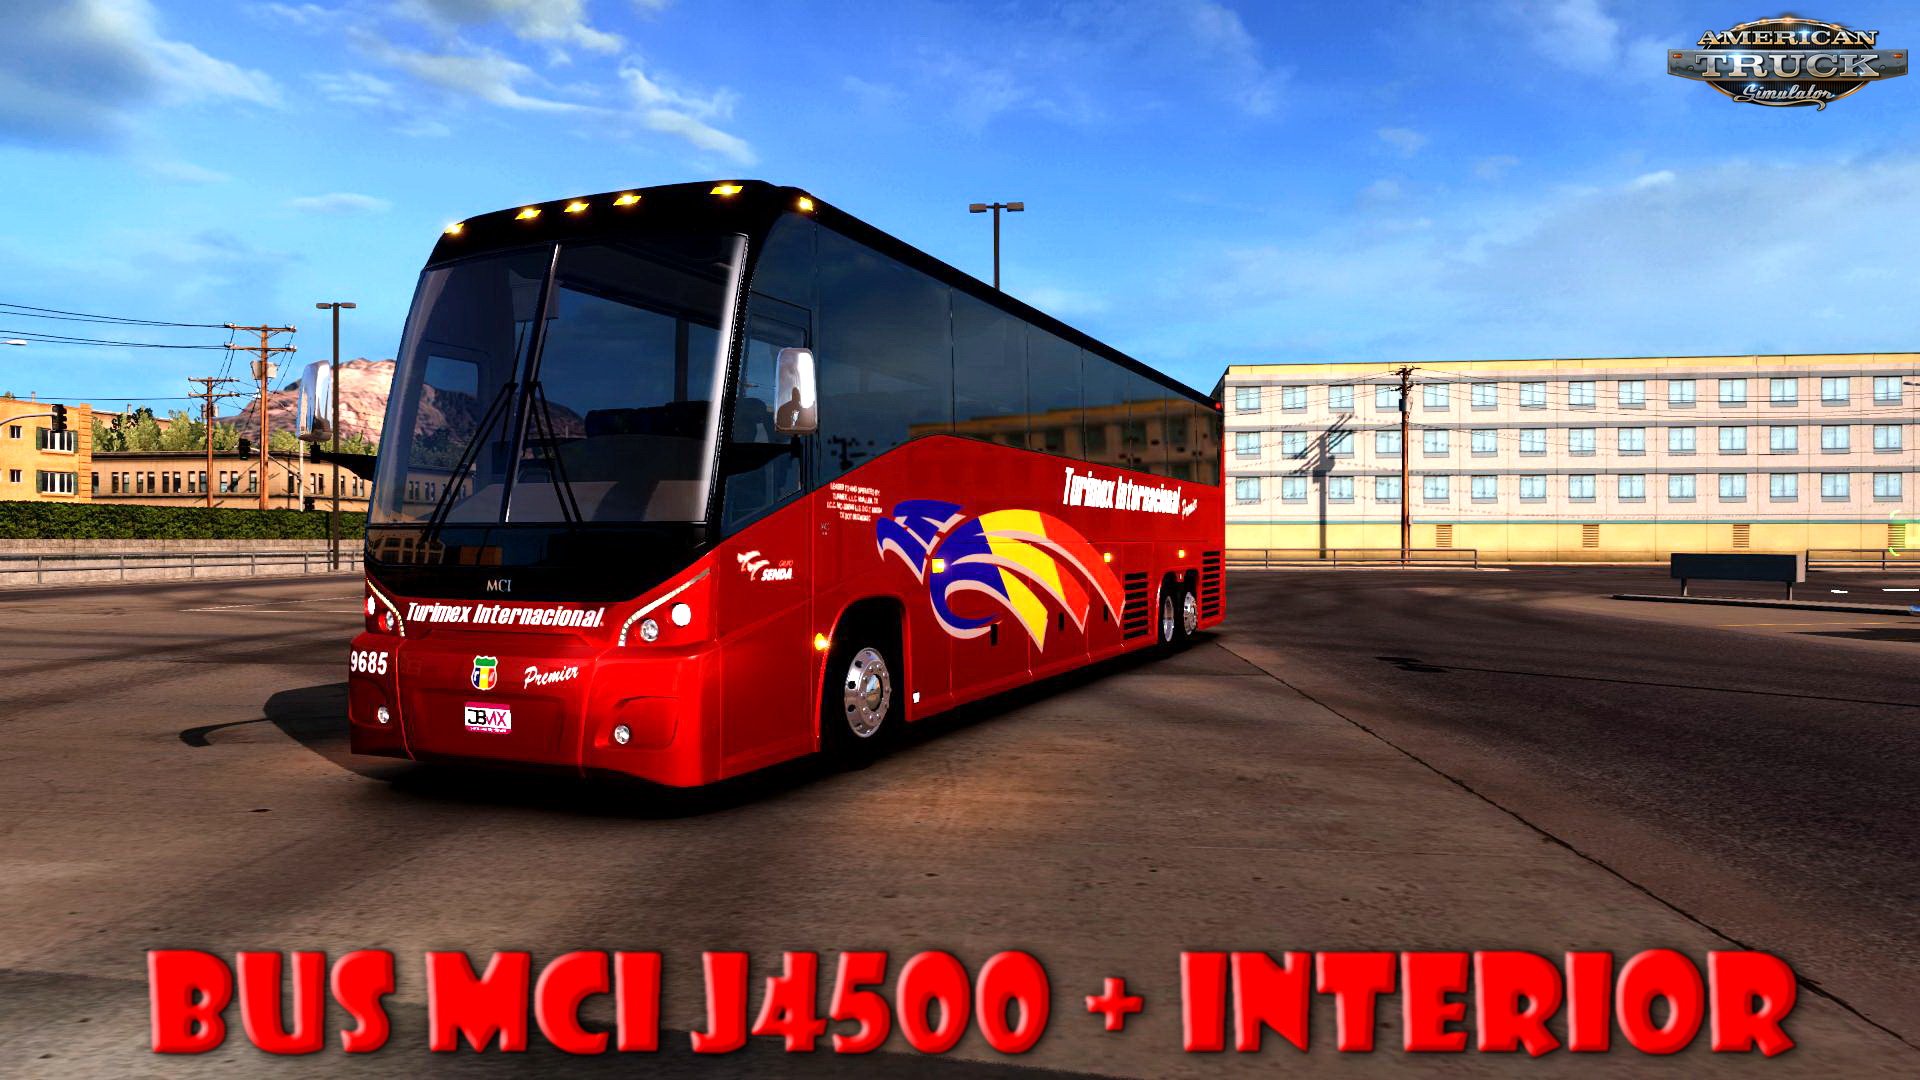 Bus MCI J4500 + Interior v1.0 by DBMX (1.30.x)